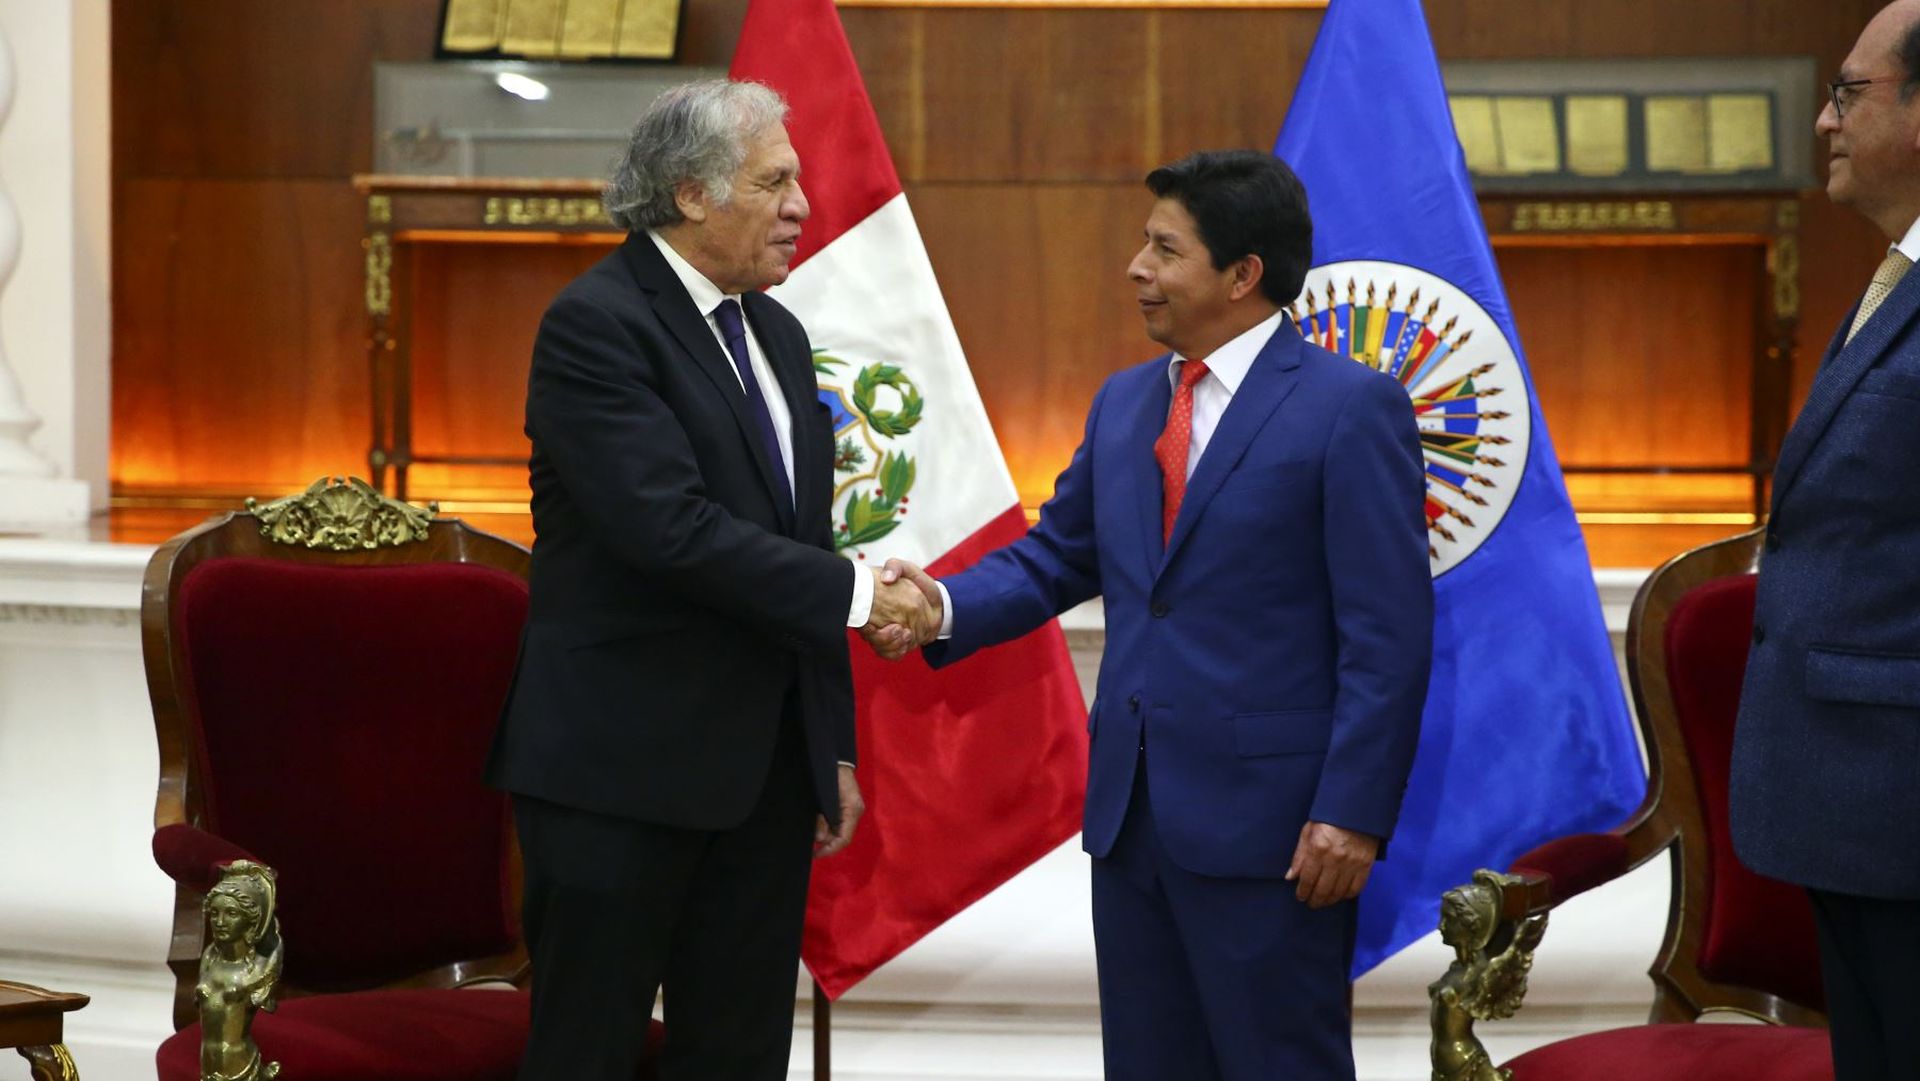 Luis Almagro met with President Castillo